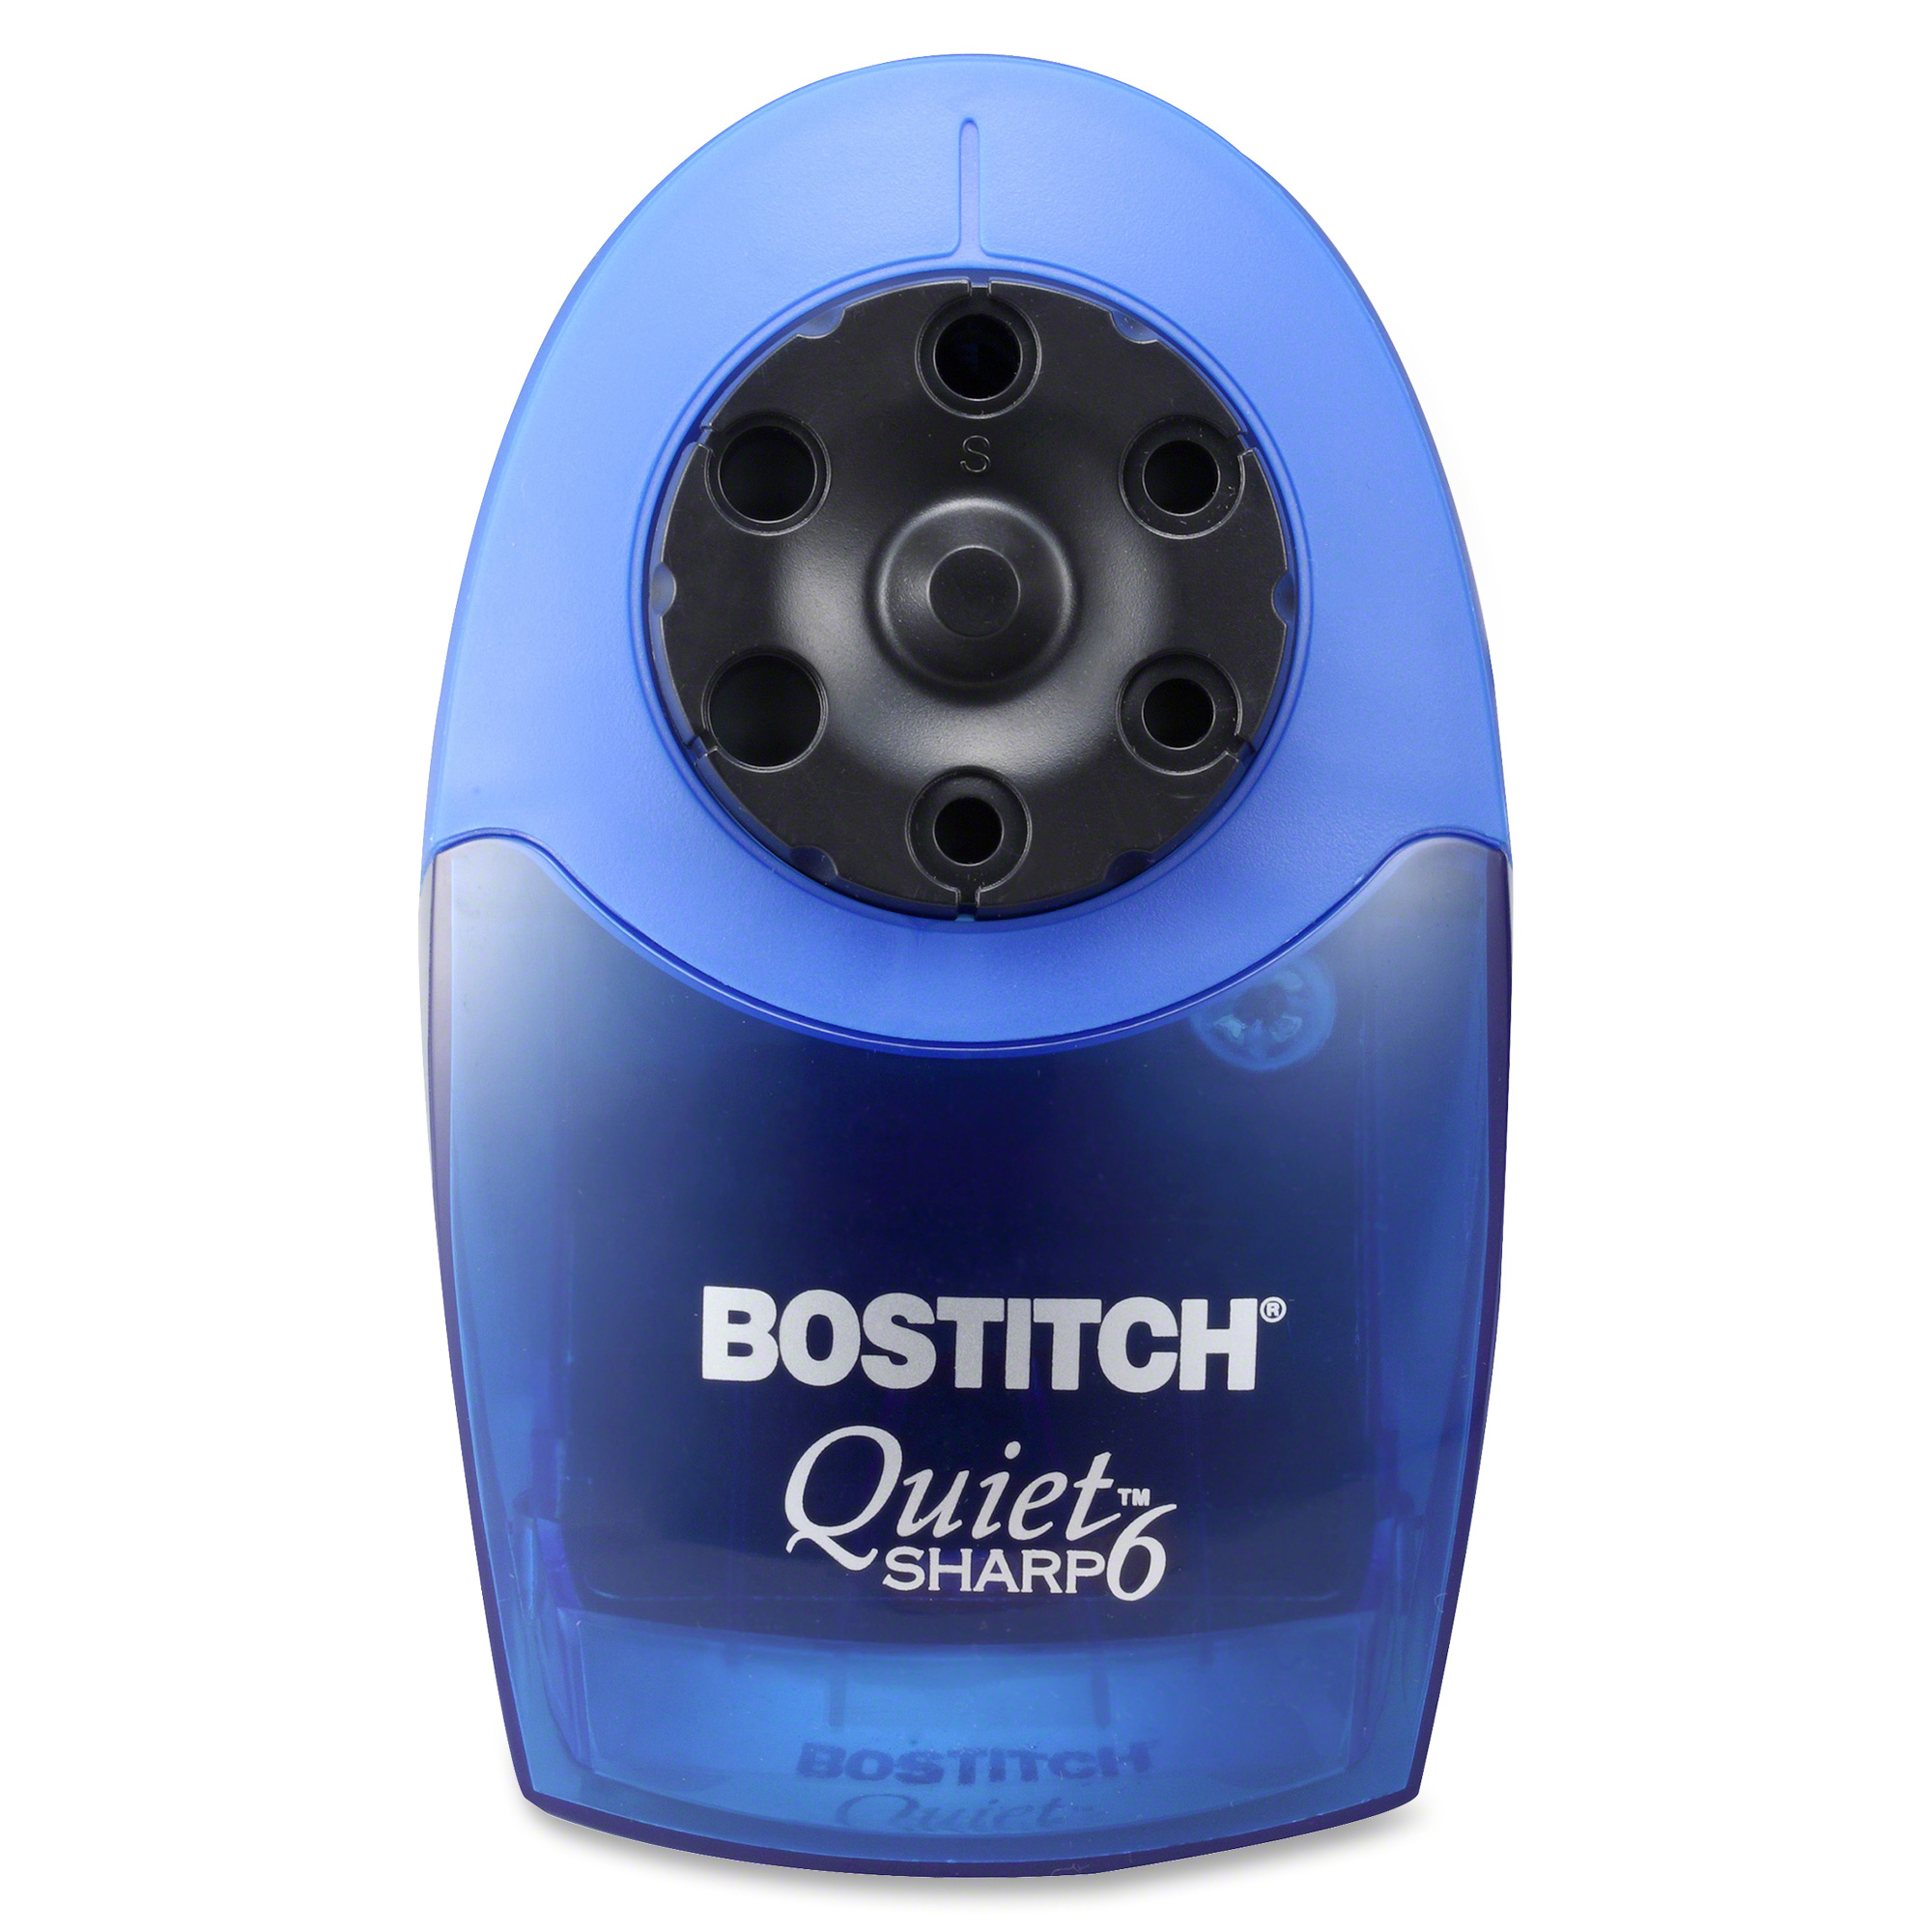 BOSTITCH Quietsharp 6 Classroom Electric Pencil Sharpener, Blue - image 4 of 9